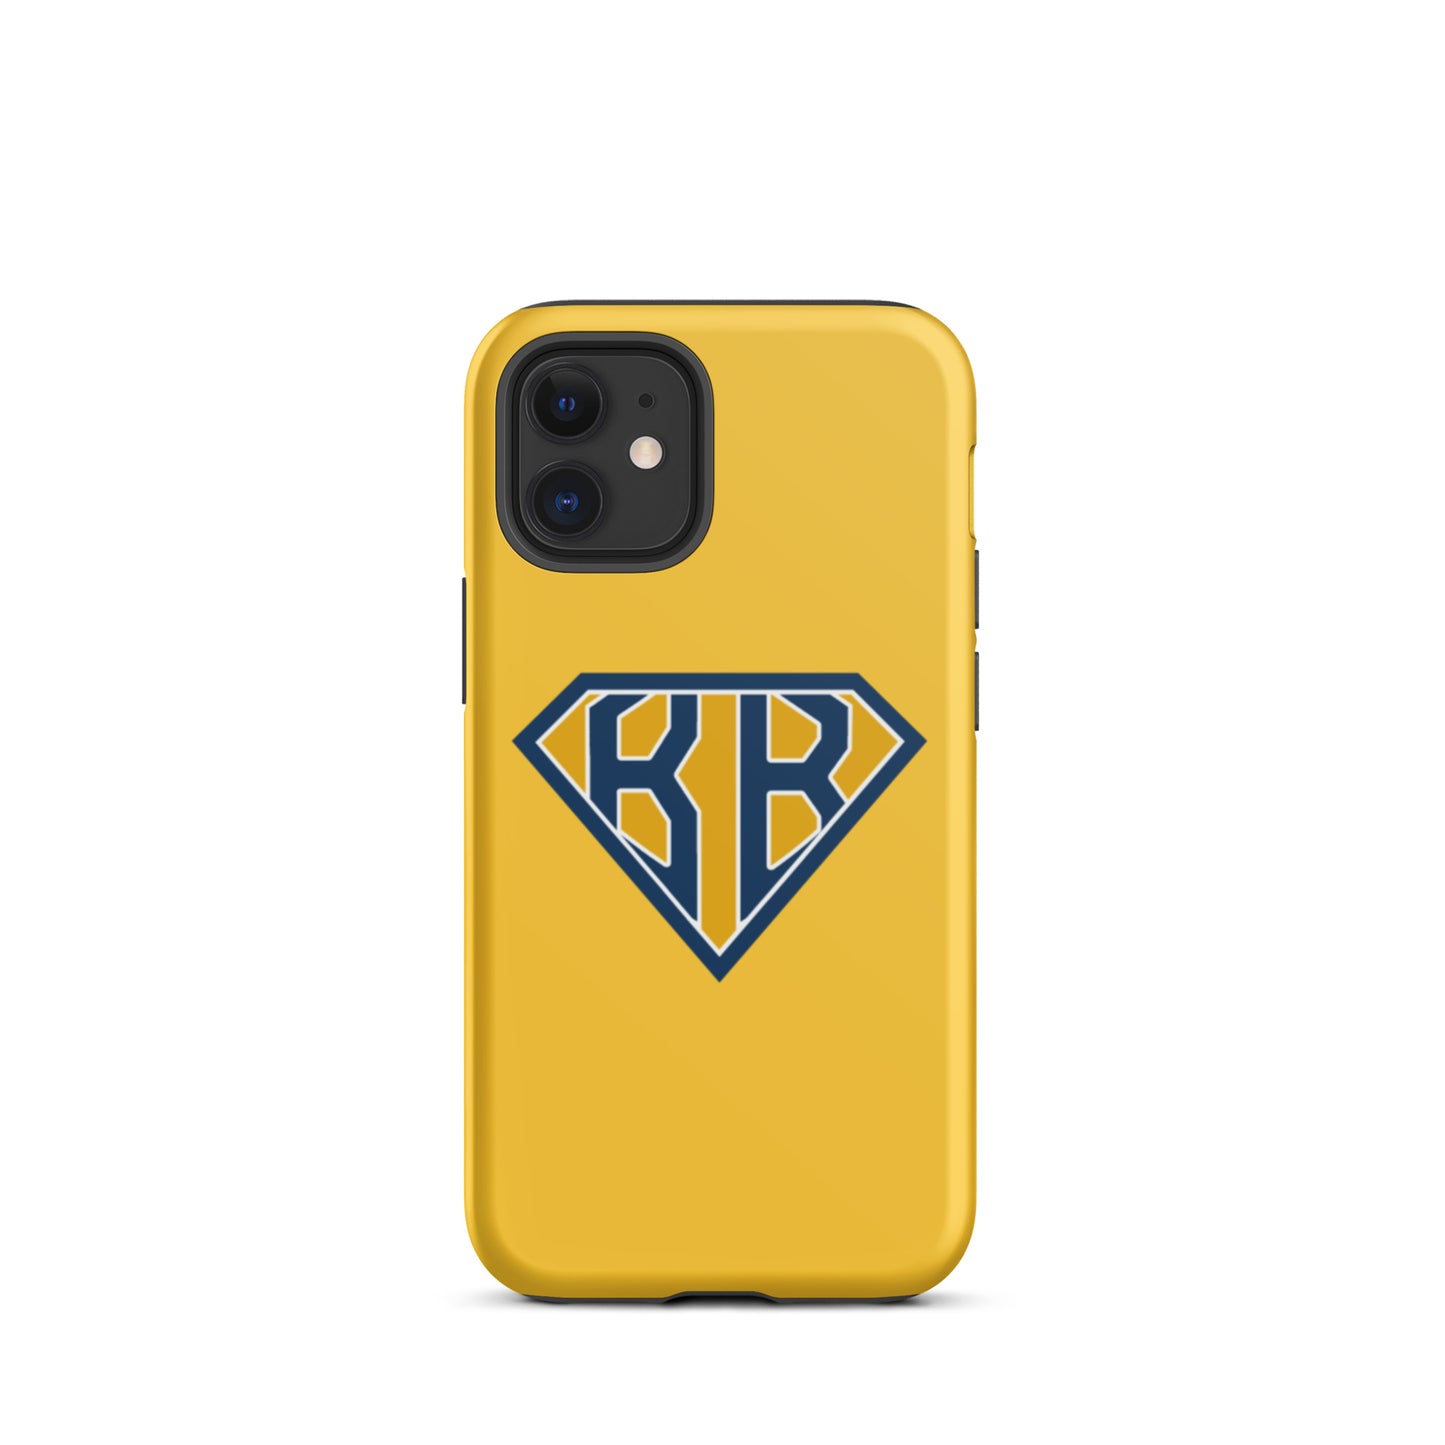 BB Tough iPhone case